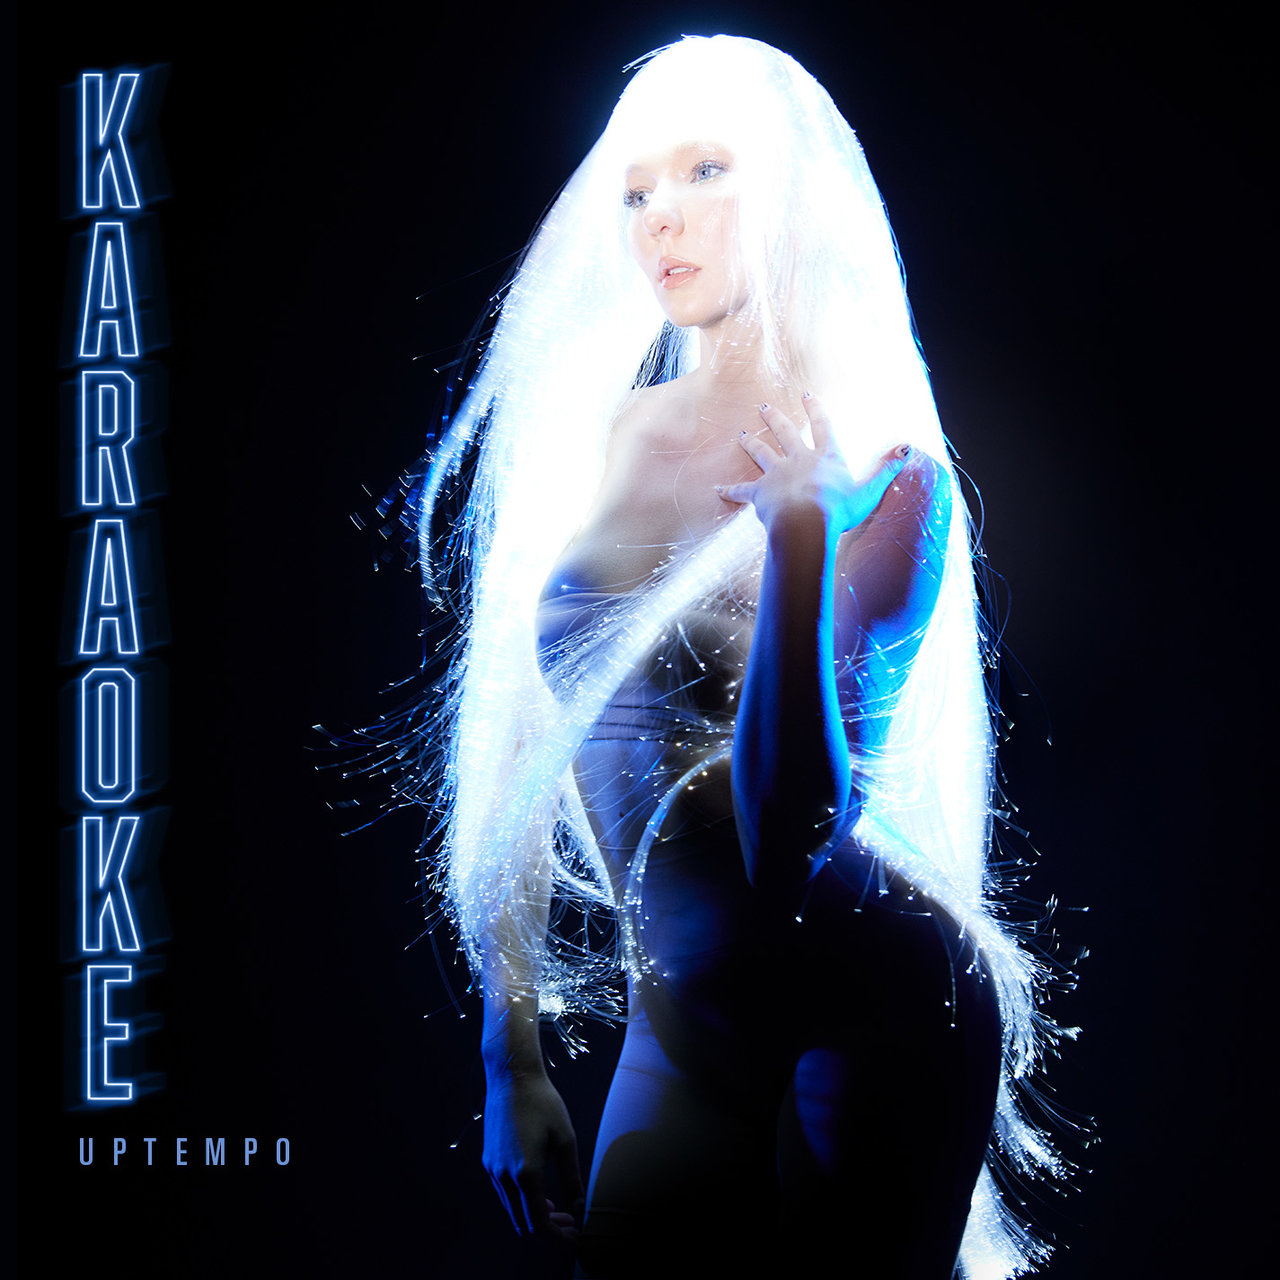 Sorana Karaoke (Uptempo) cover artwork